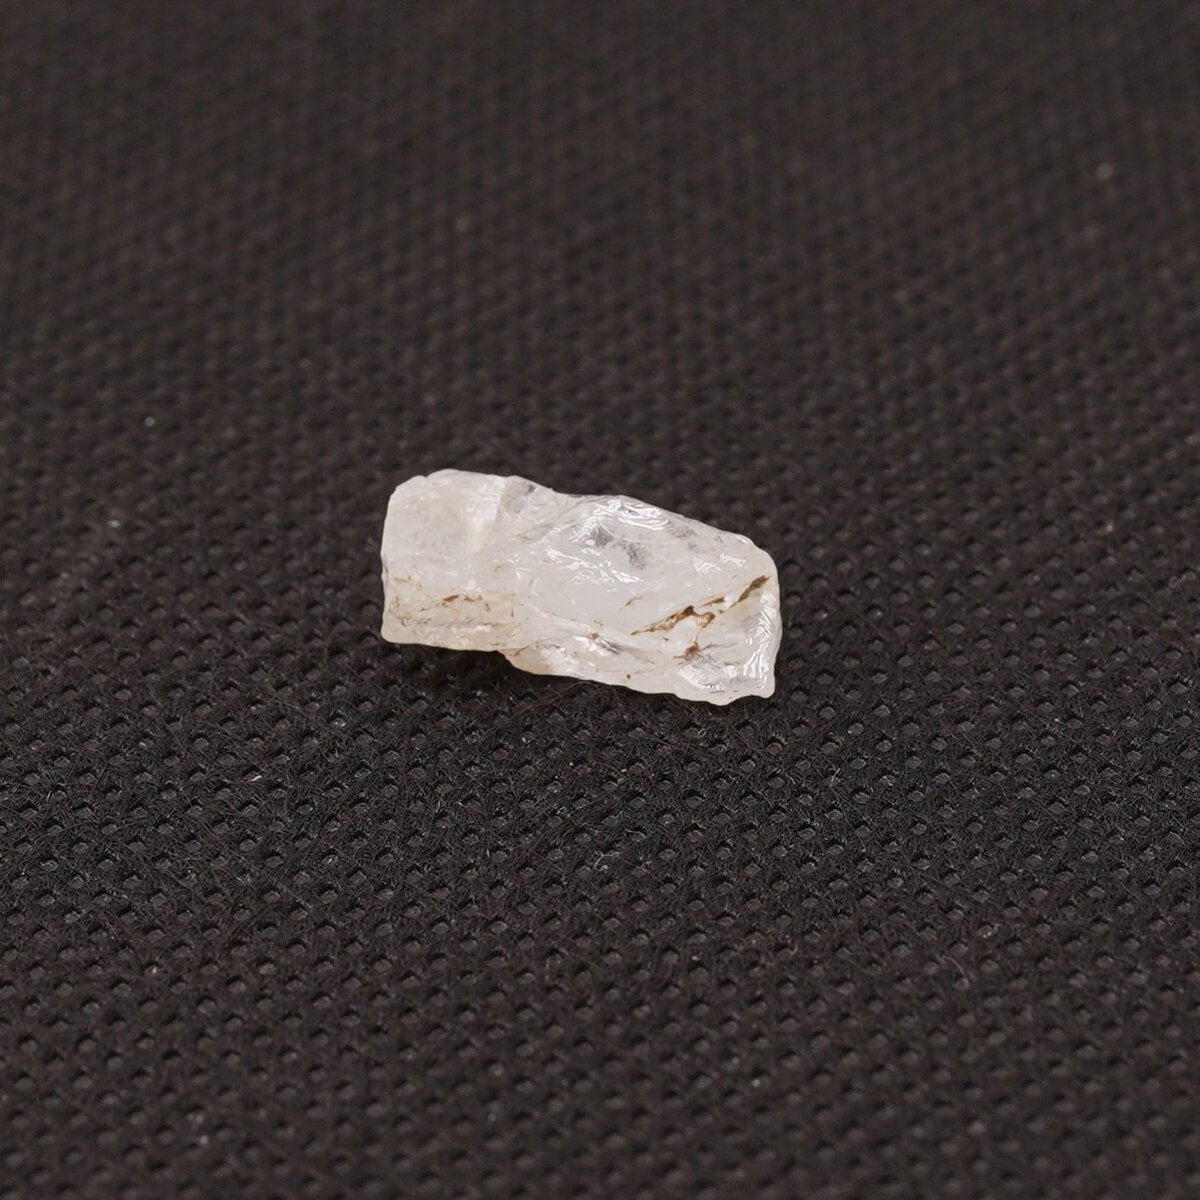 Fenacit nigerian cristal natural unicat f113